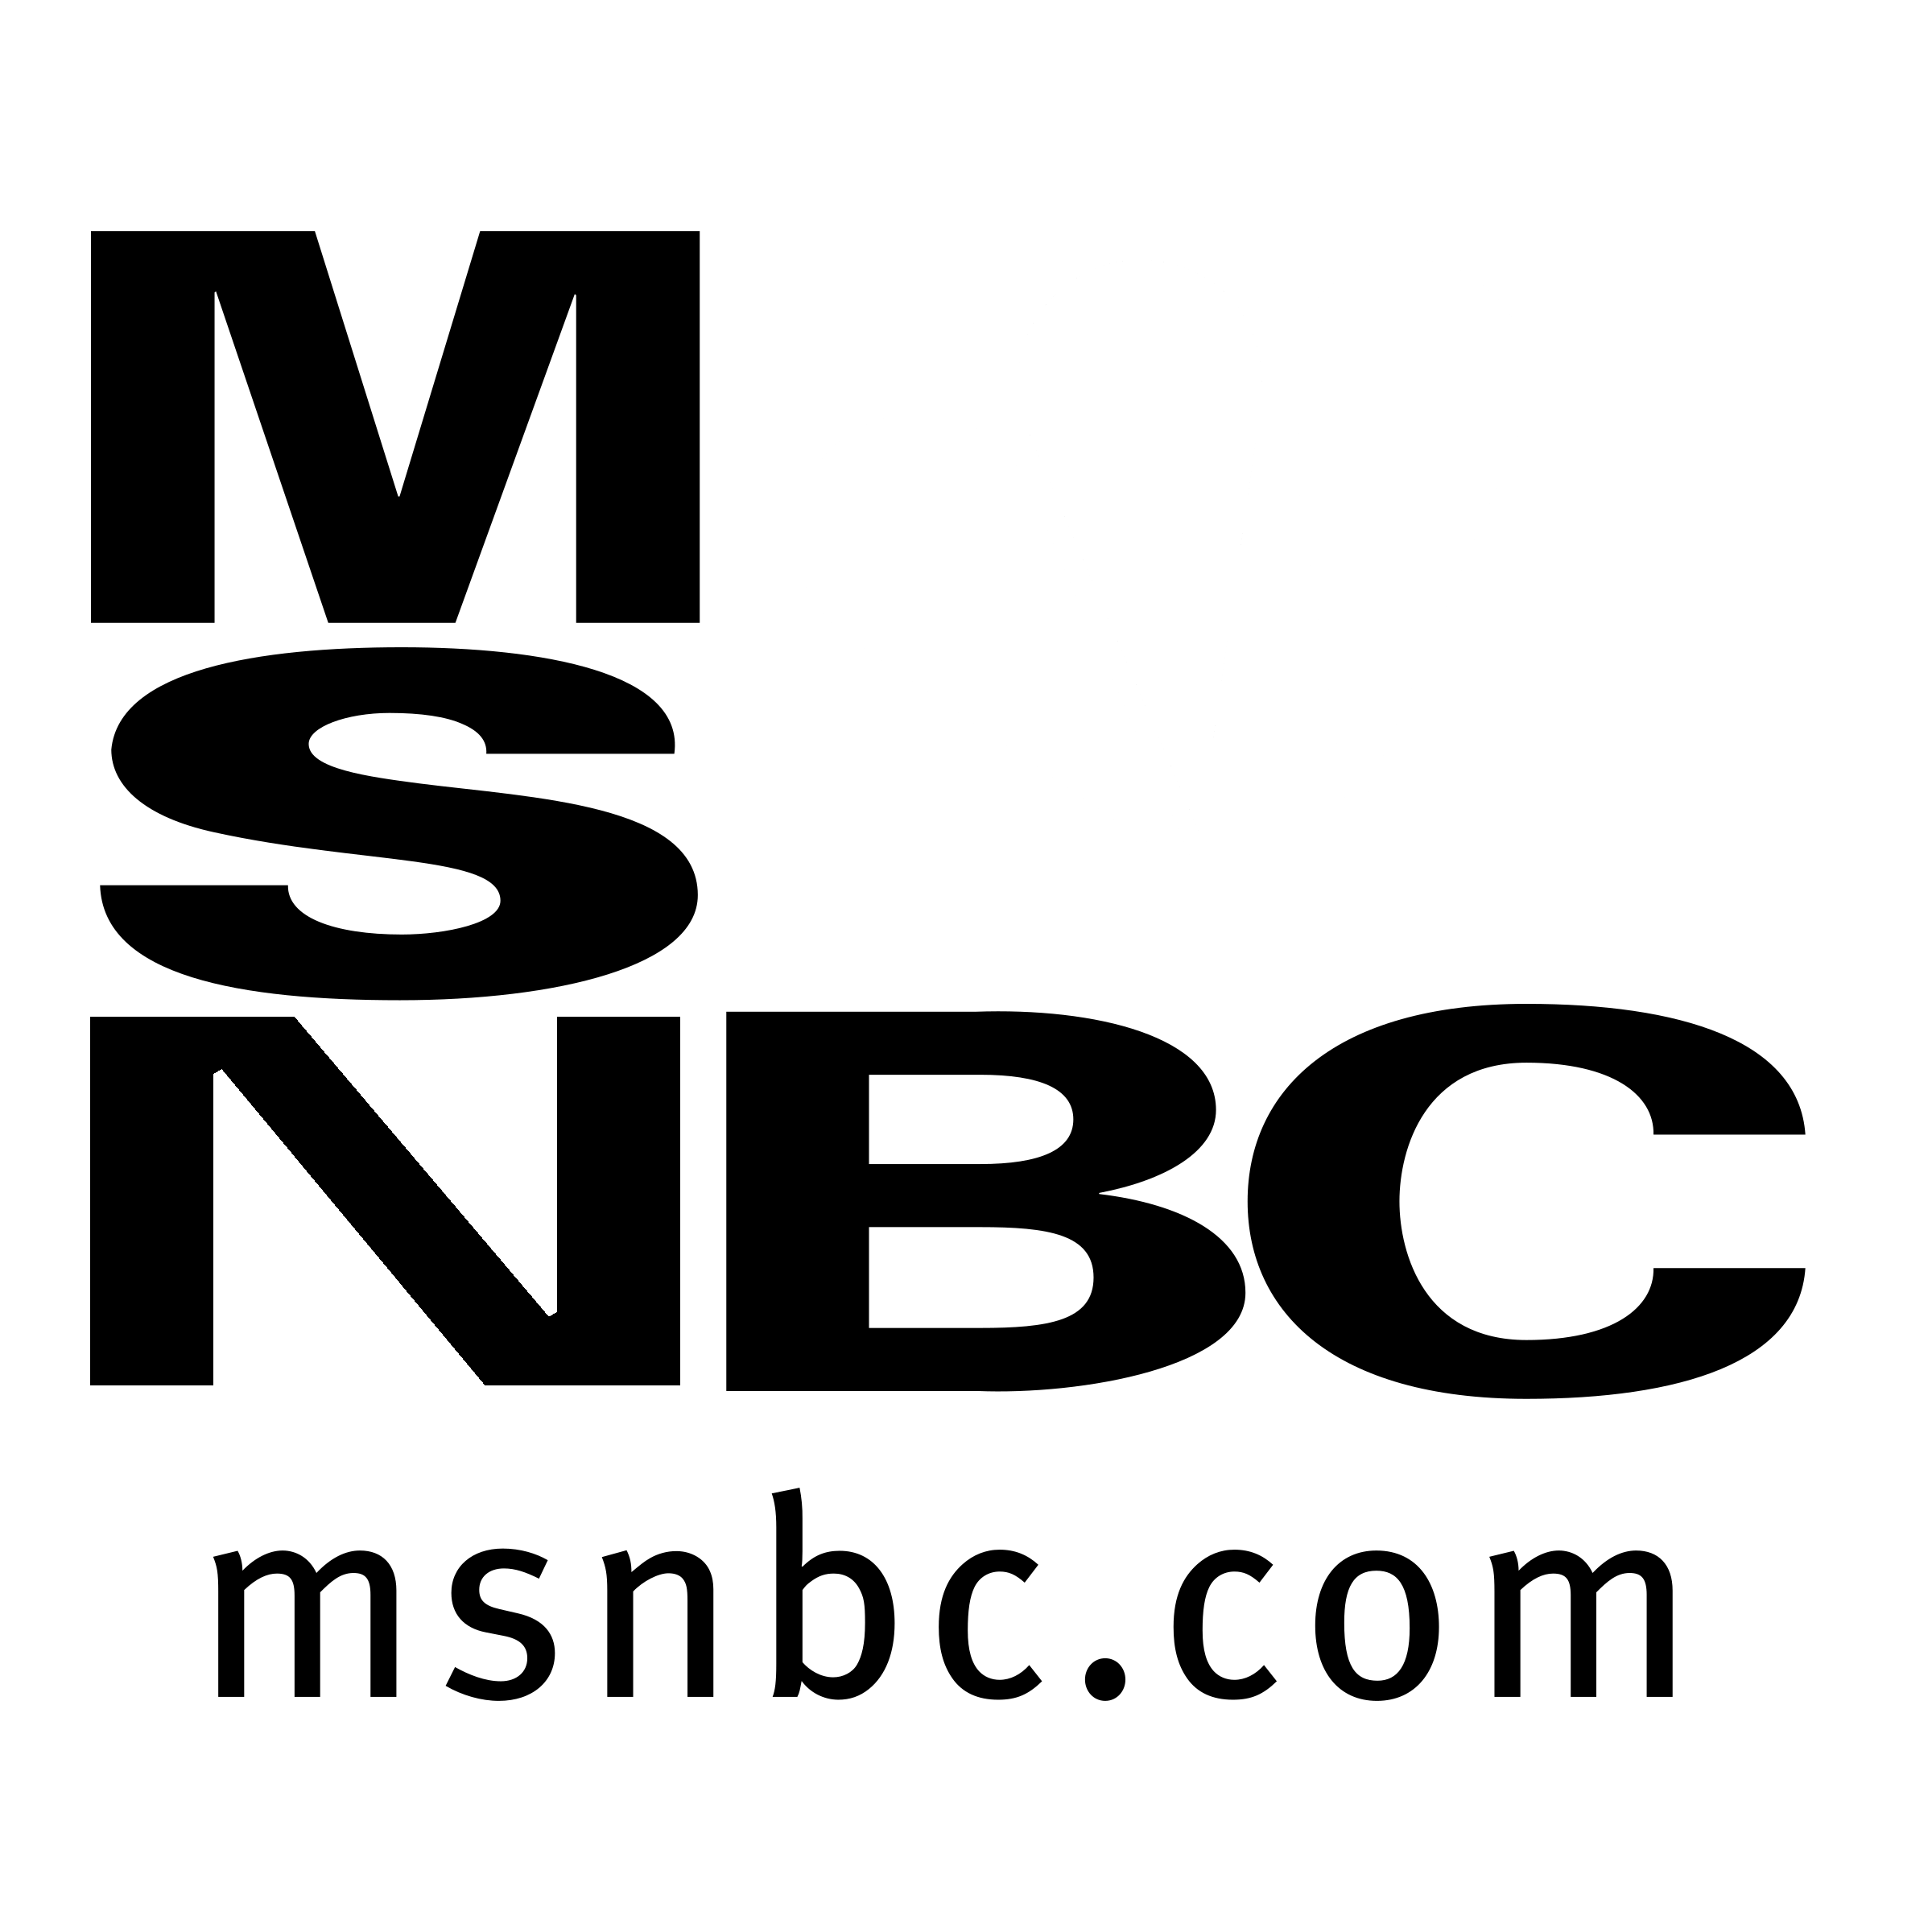 Msnbc.com Logo - MSNBC Logo PNG Transparent & SVG Vector - Freebie Supply